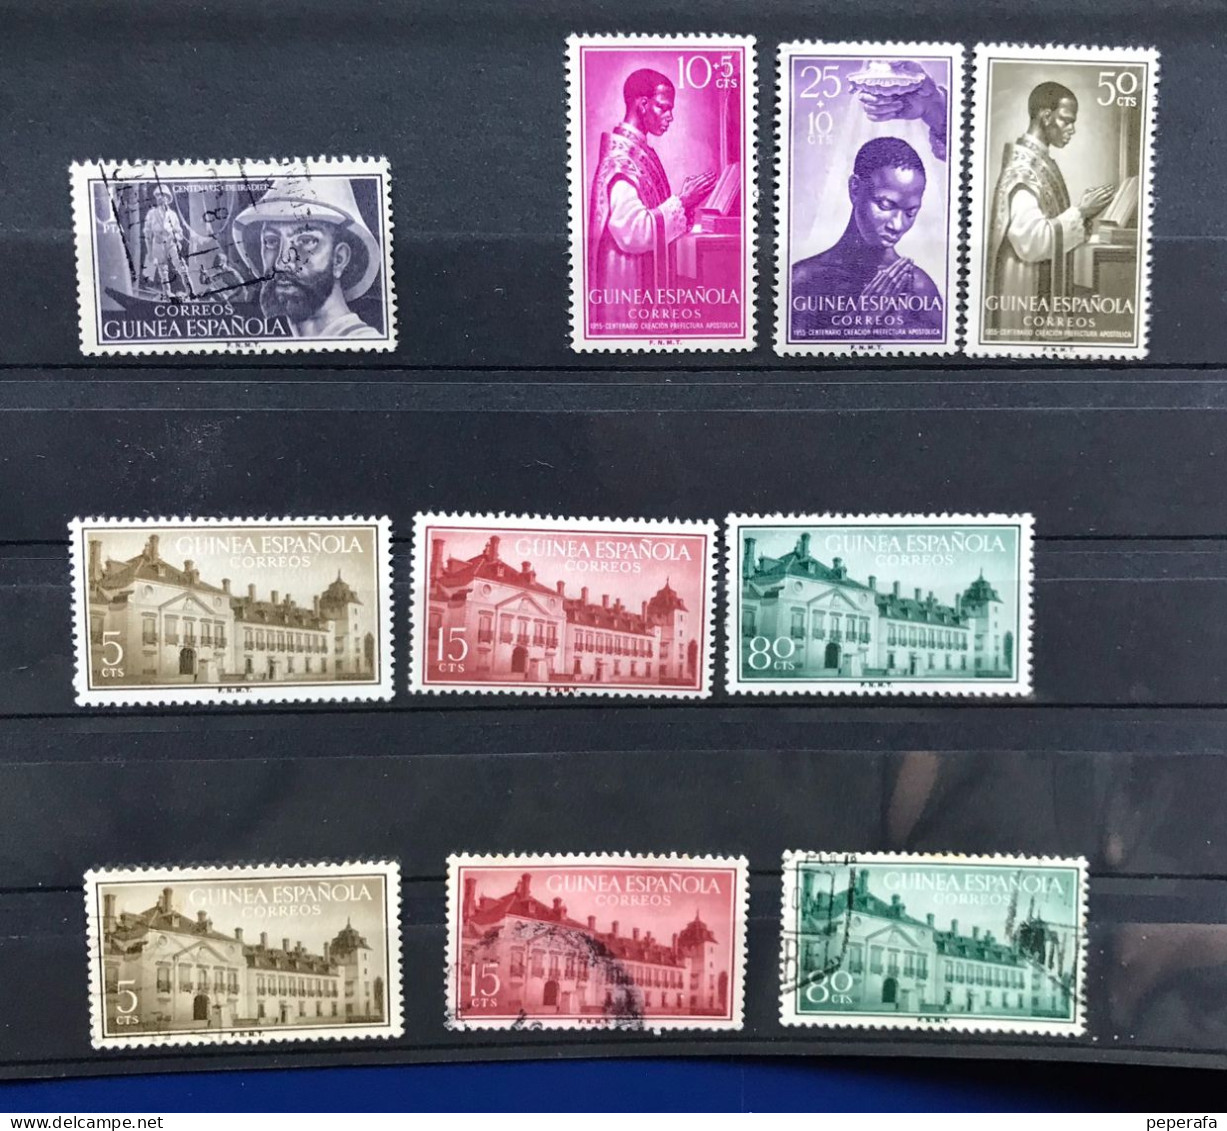 Spain, Spagne, España, GUINEA ESPAÑOLA, GOLFO DE GUINEA 1955 - Guinea Española